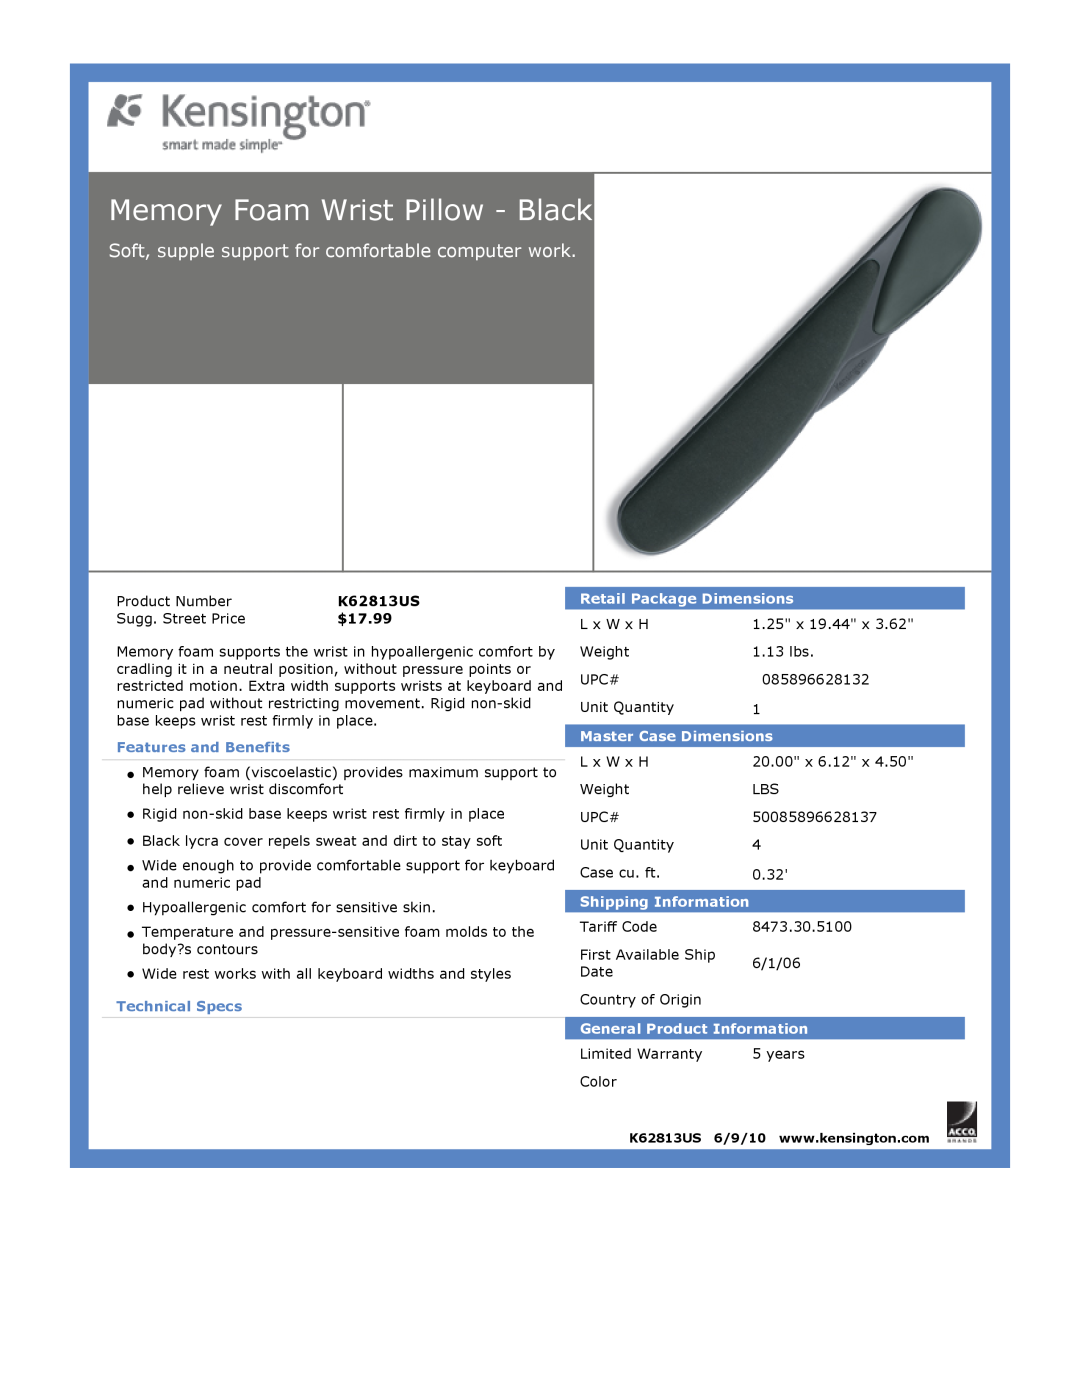 Kensington EU64325 dimensions Memory Foam Wrist Pillow - Black, $17.99, Features and Benefits, Technical Specs 